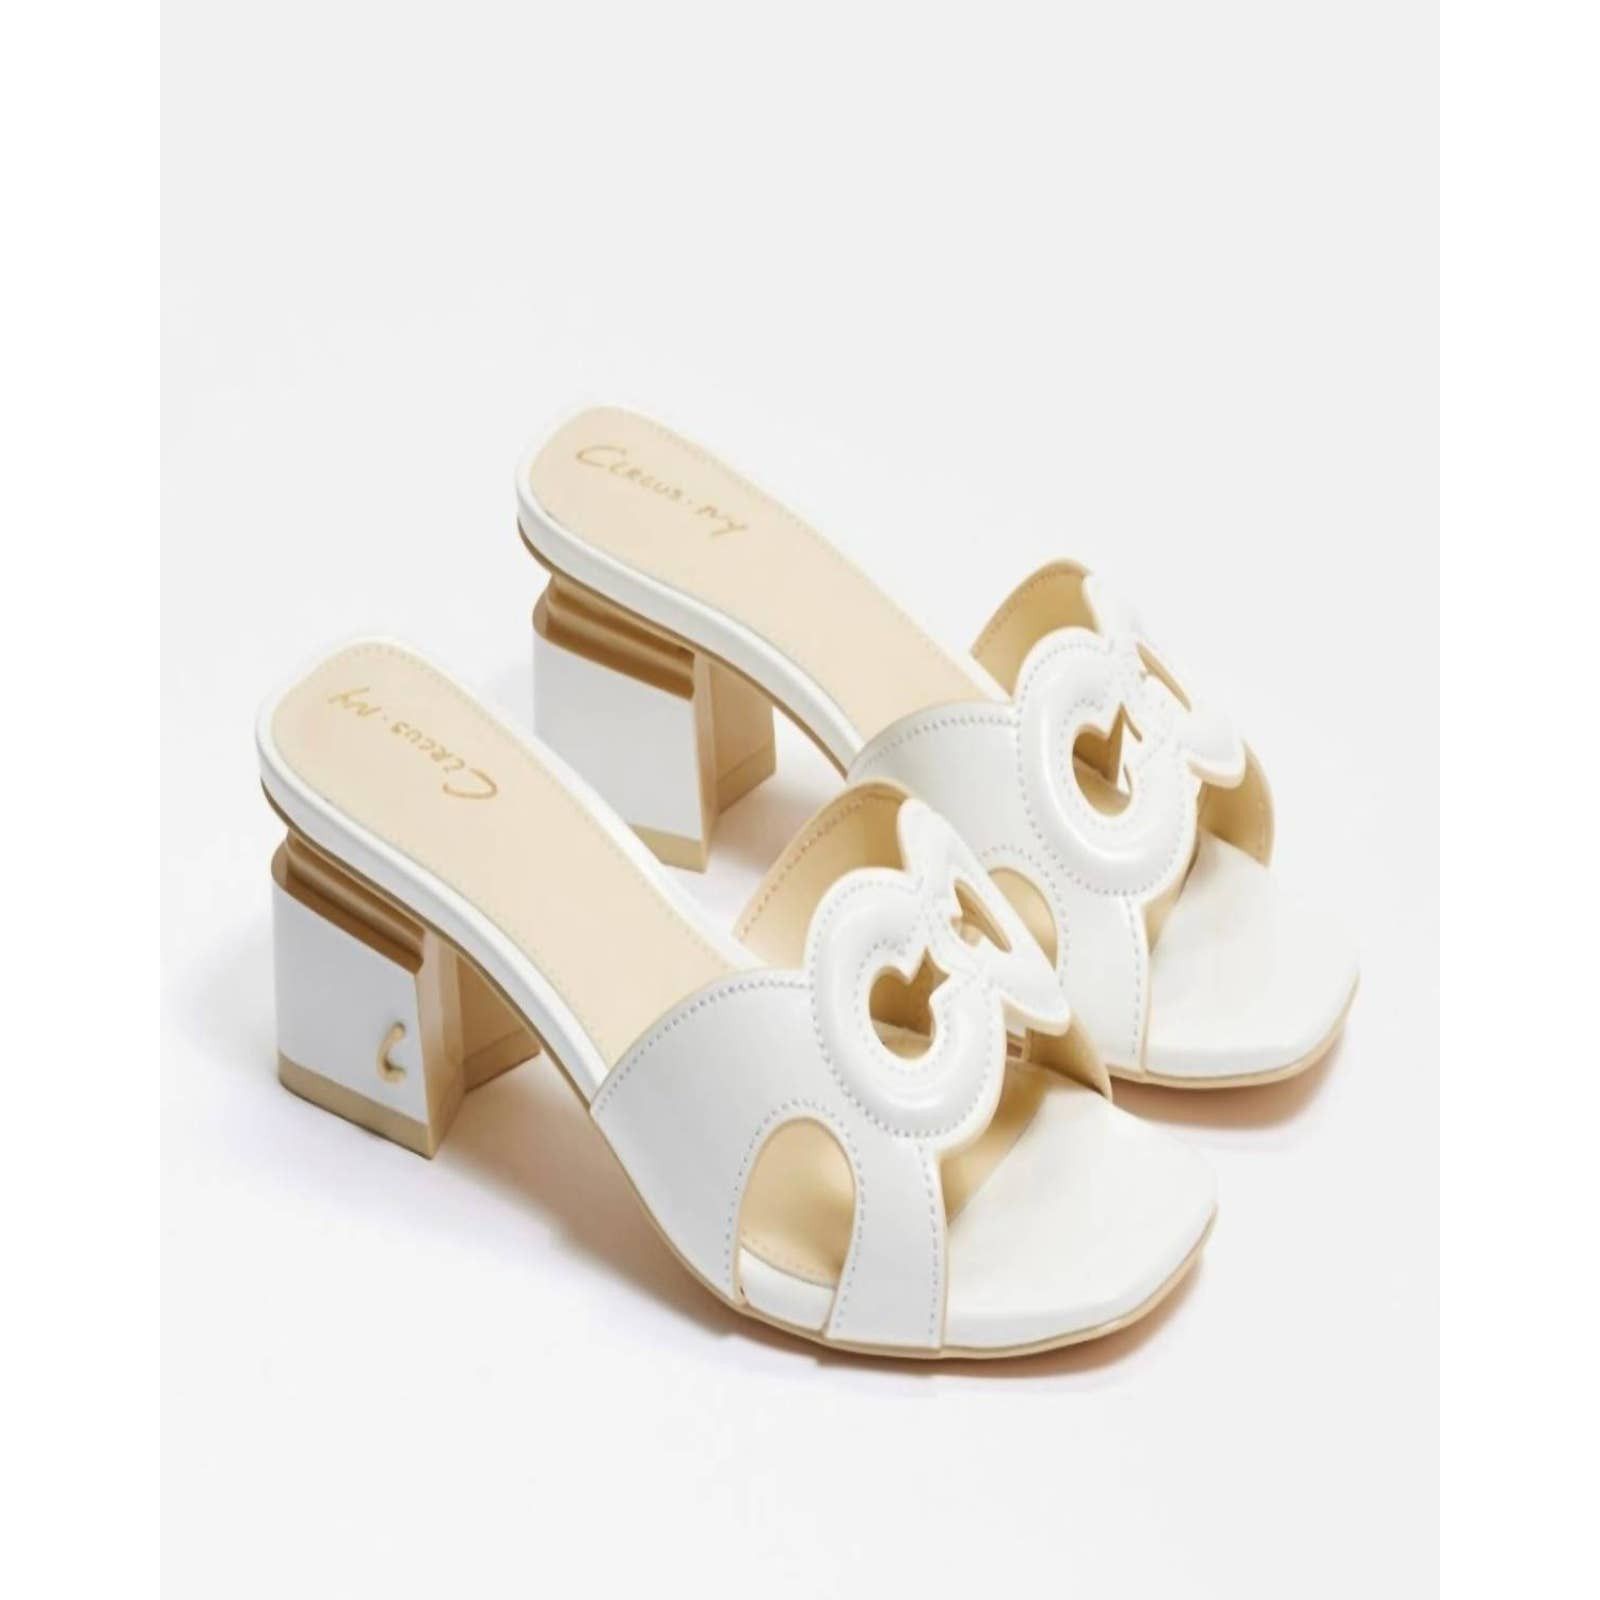 Designer CIRCUS.NY nia sandals in bright white | Grailed